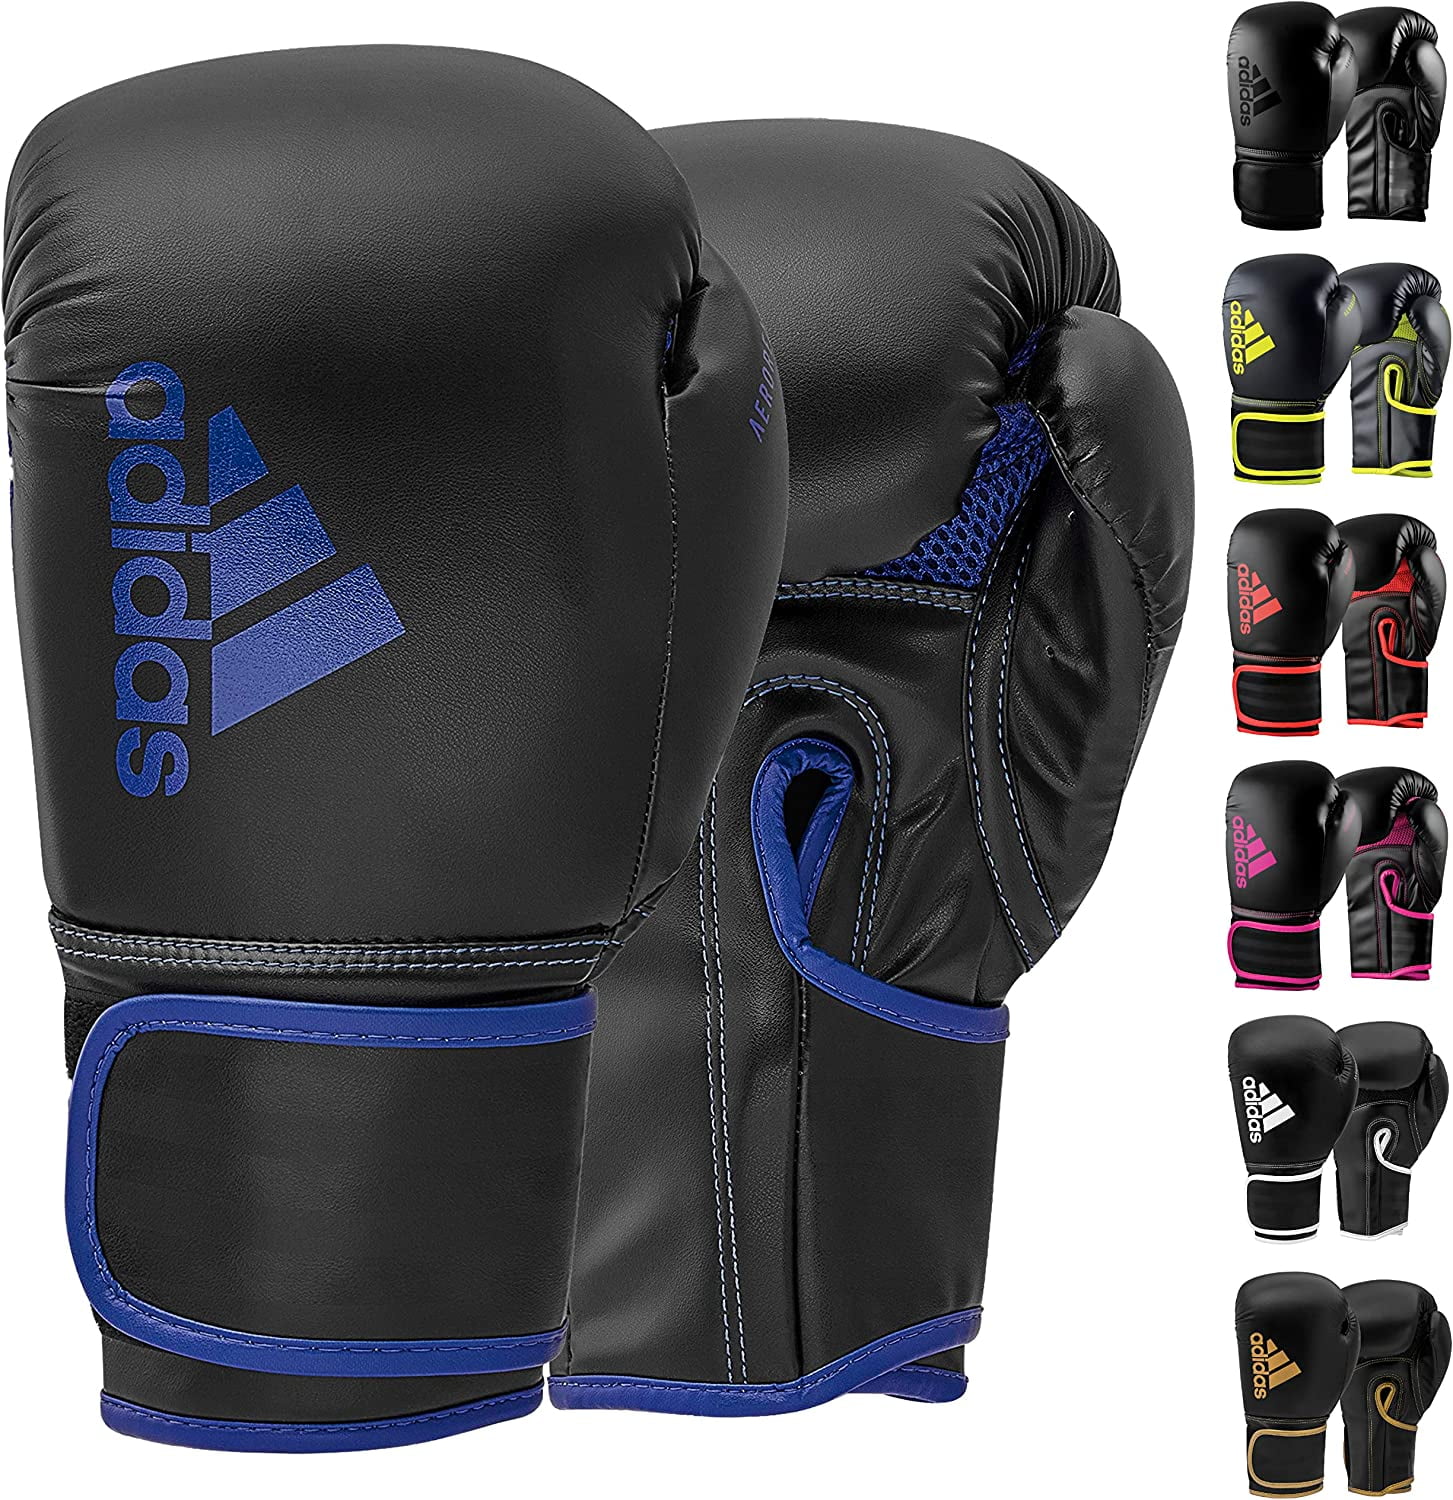 Adidas Hybrid 80 Boxing Gloves, pair set - Training Gloves for Kickboxing - Sparring Gloves for Men, Women and Kids Walmart.com